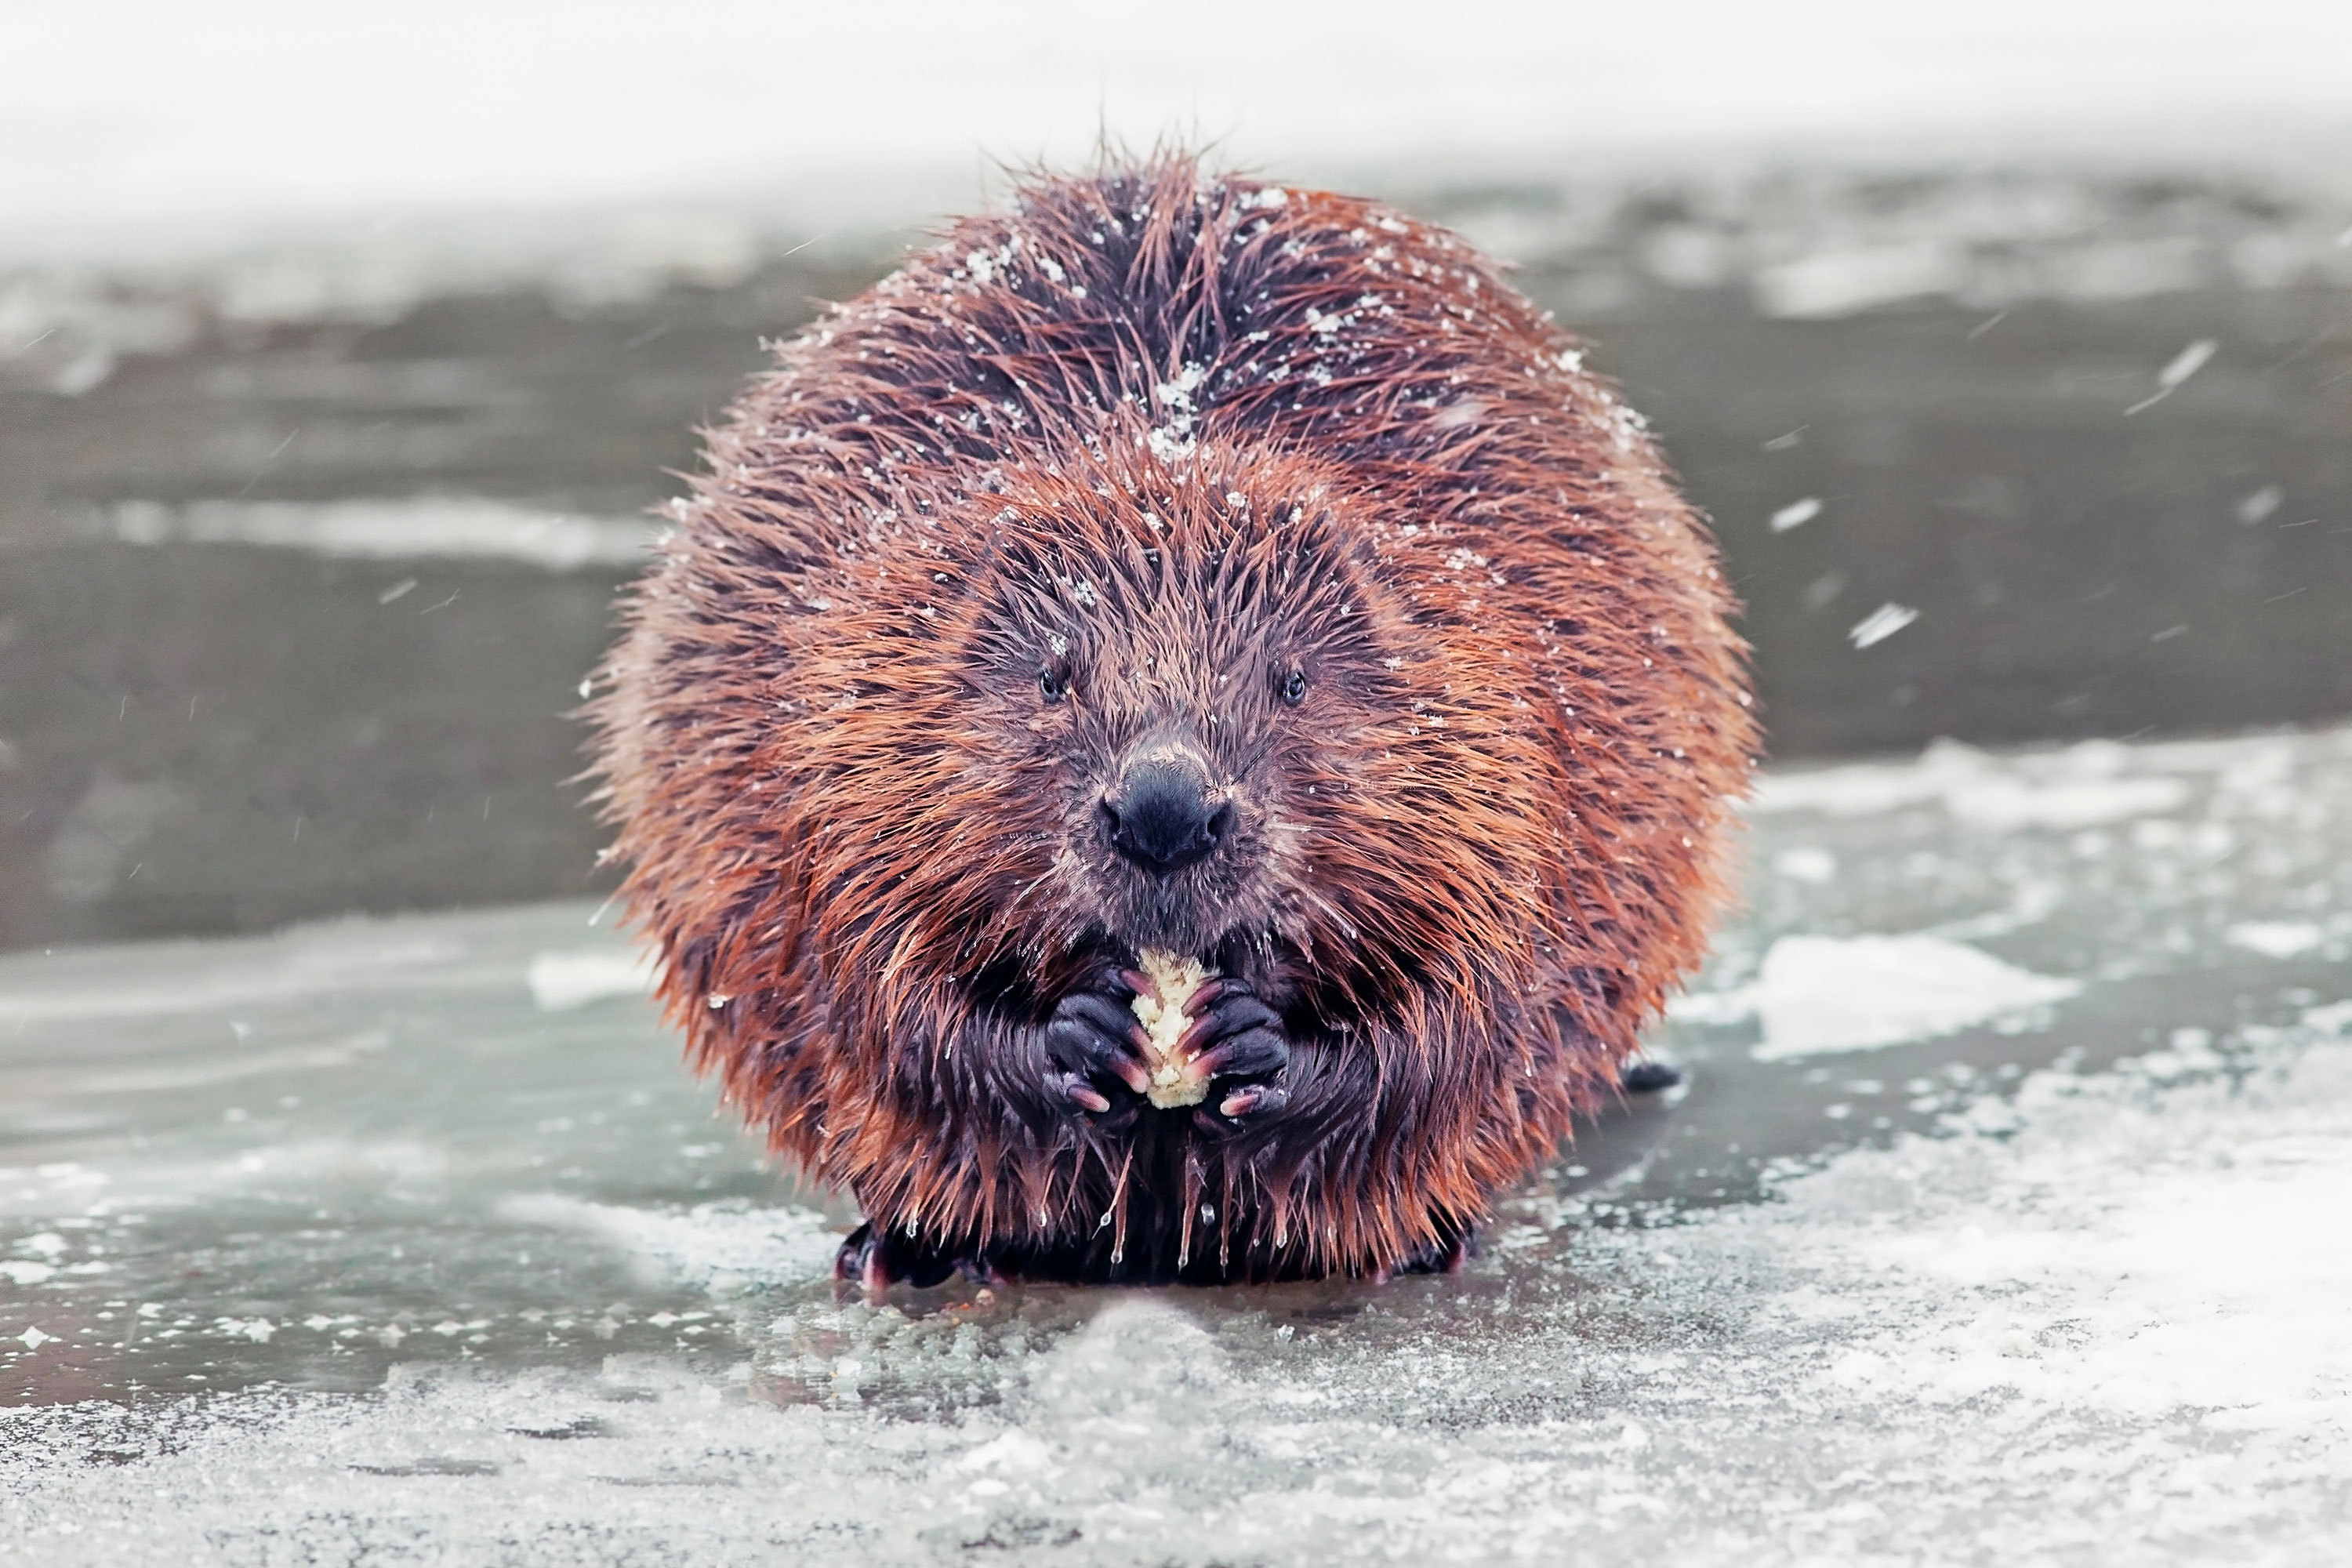 A beaver sitting on ice.